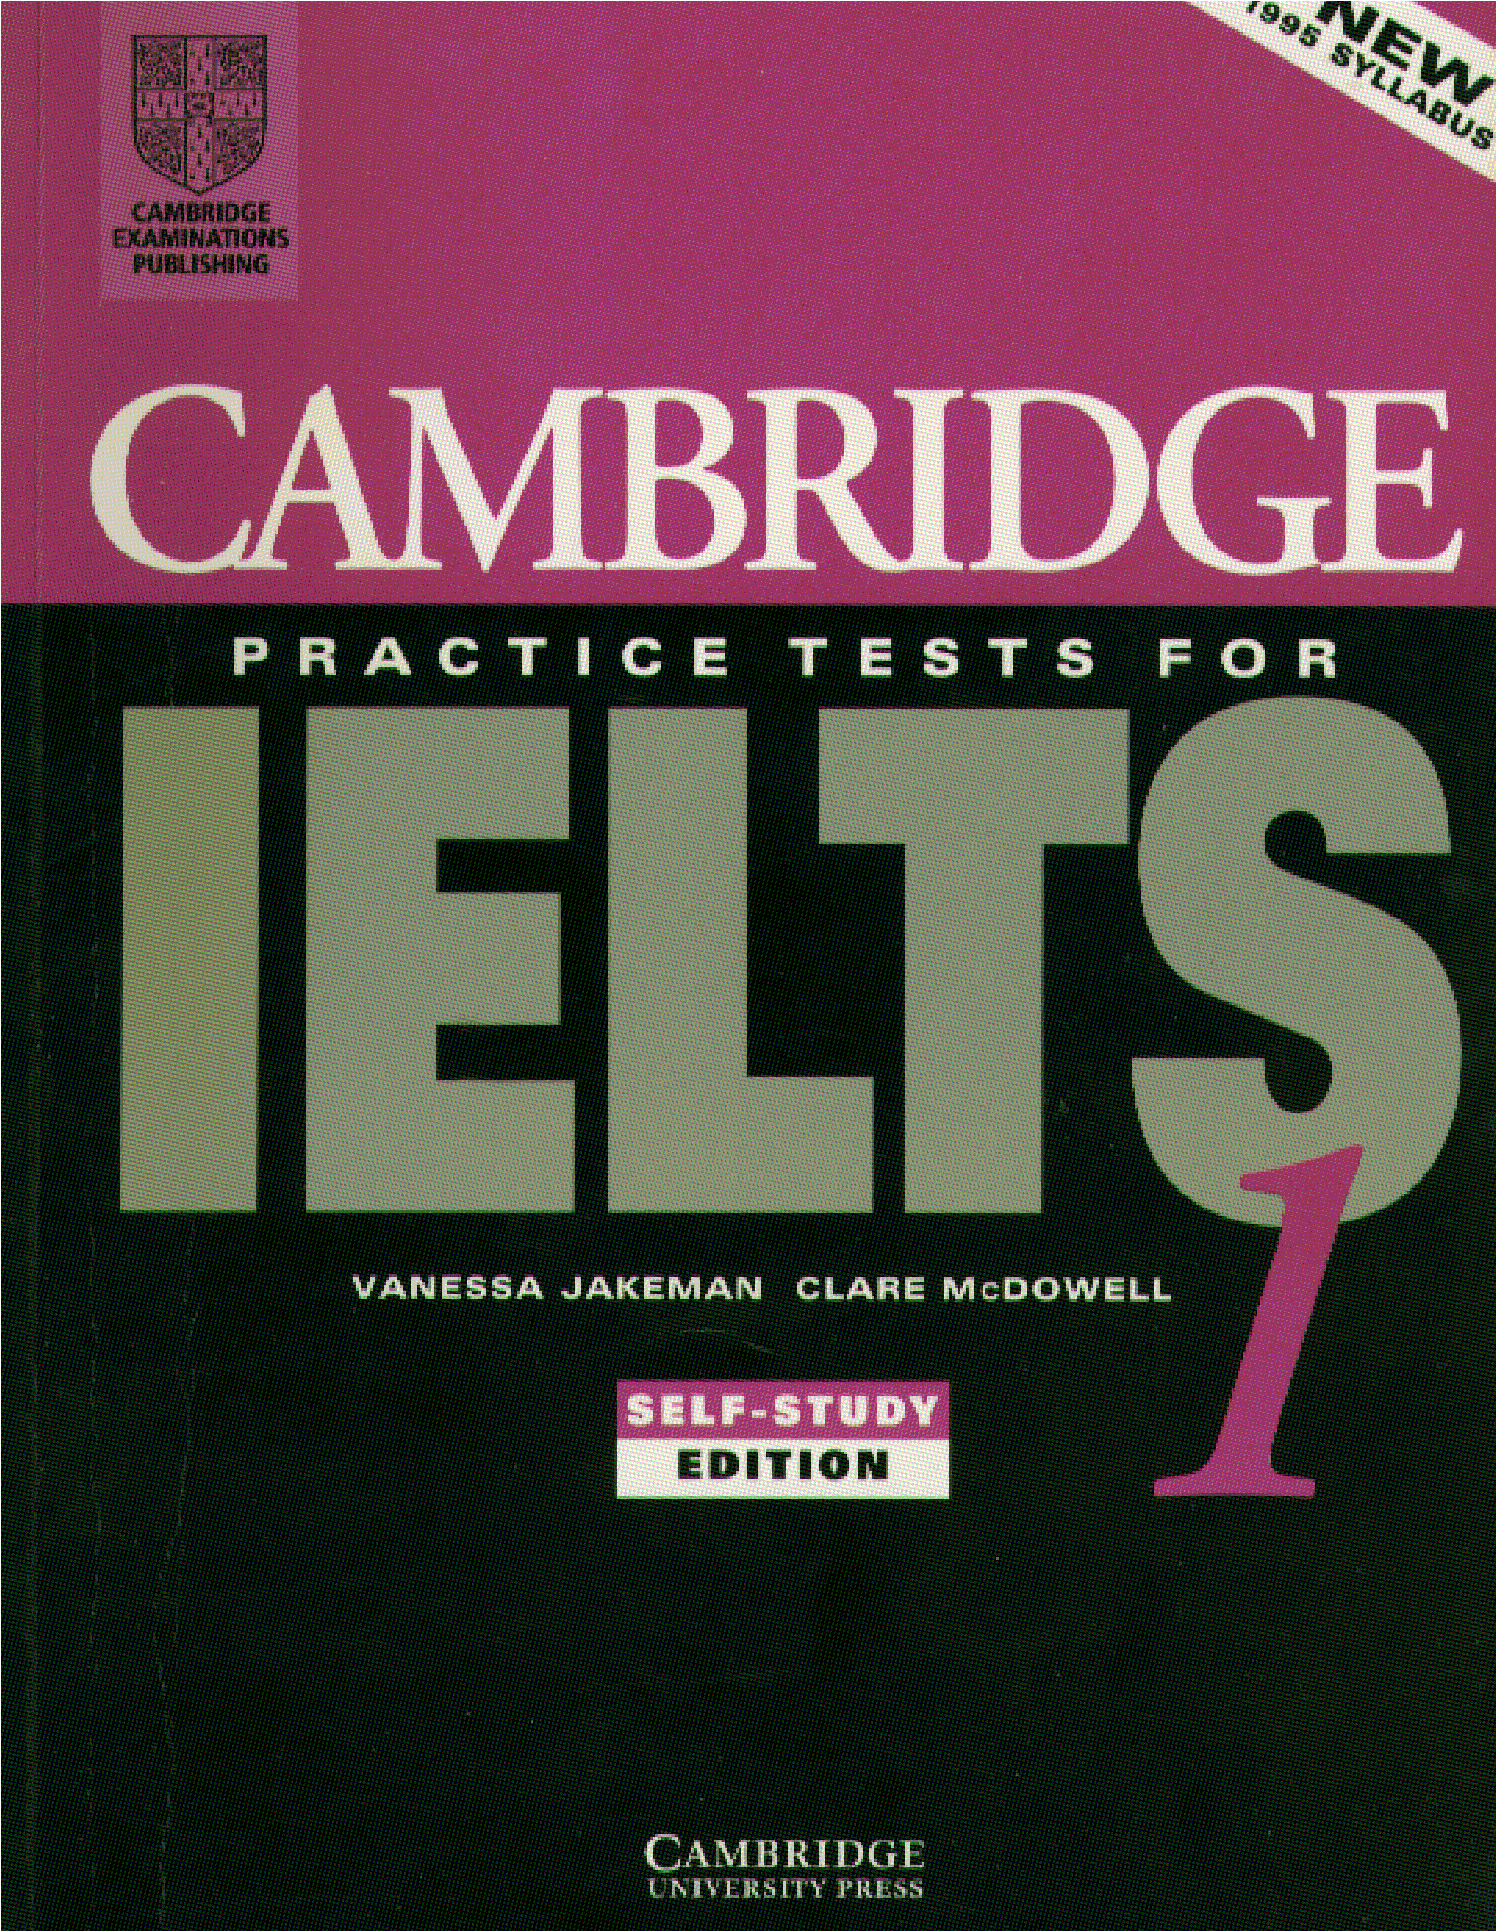 Ielts reading tests cambridge. IELTS Test Practice book Test 1. Cambridge Practice Tests for IELTS 1. Cambridge IELTS book 1. Cambridge IELTS 1 Test pdf book.